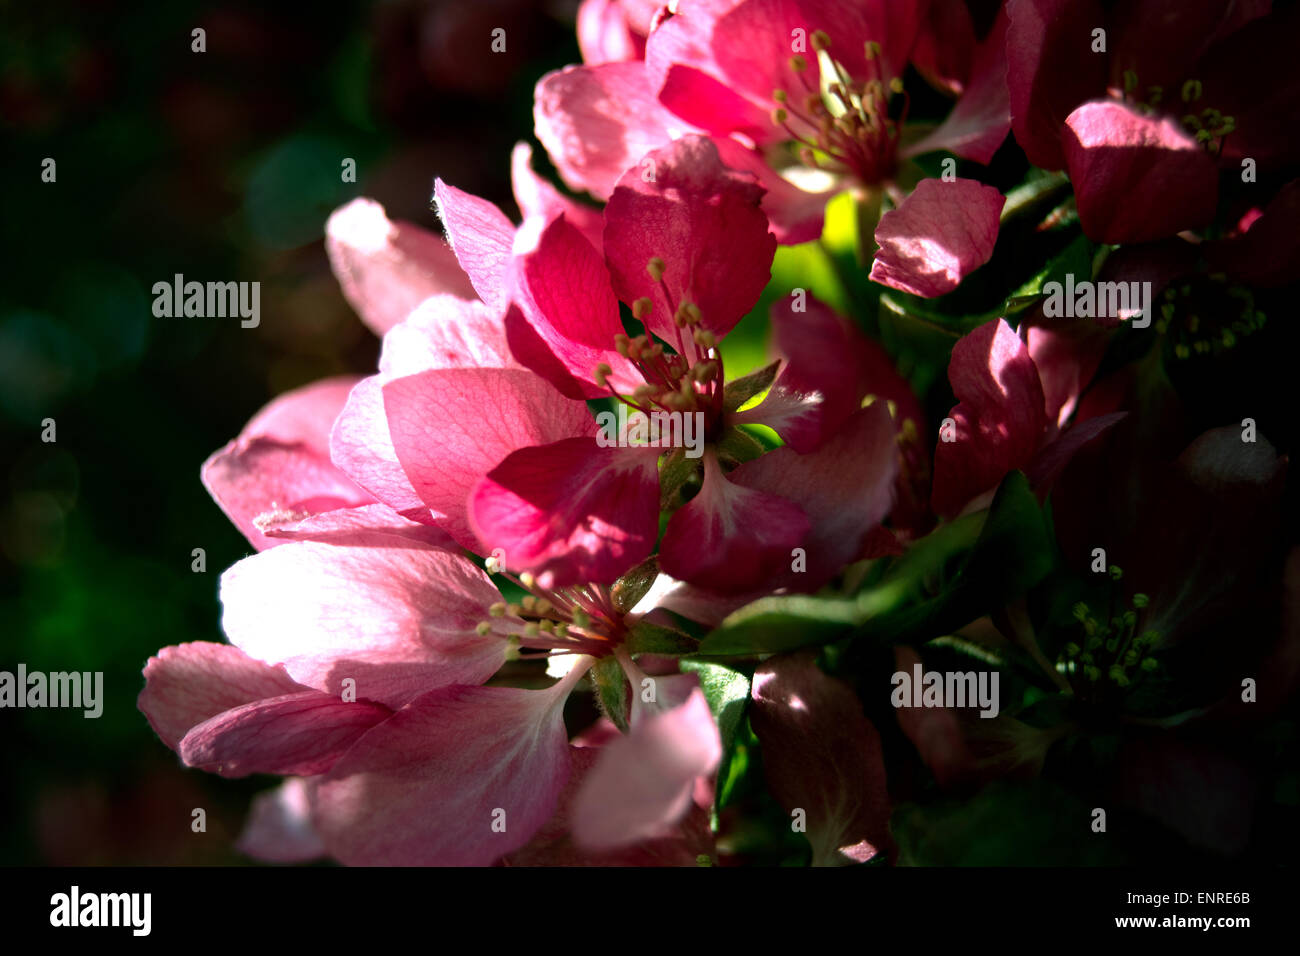 Crab apple tree flower, back lighting, pink flowers, green leaves Stock Photo